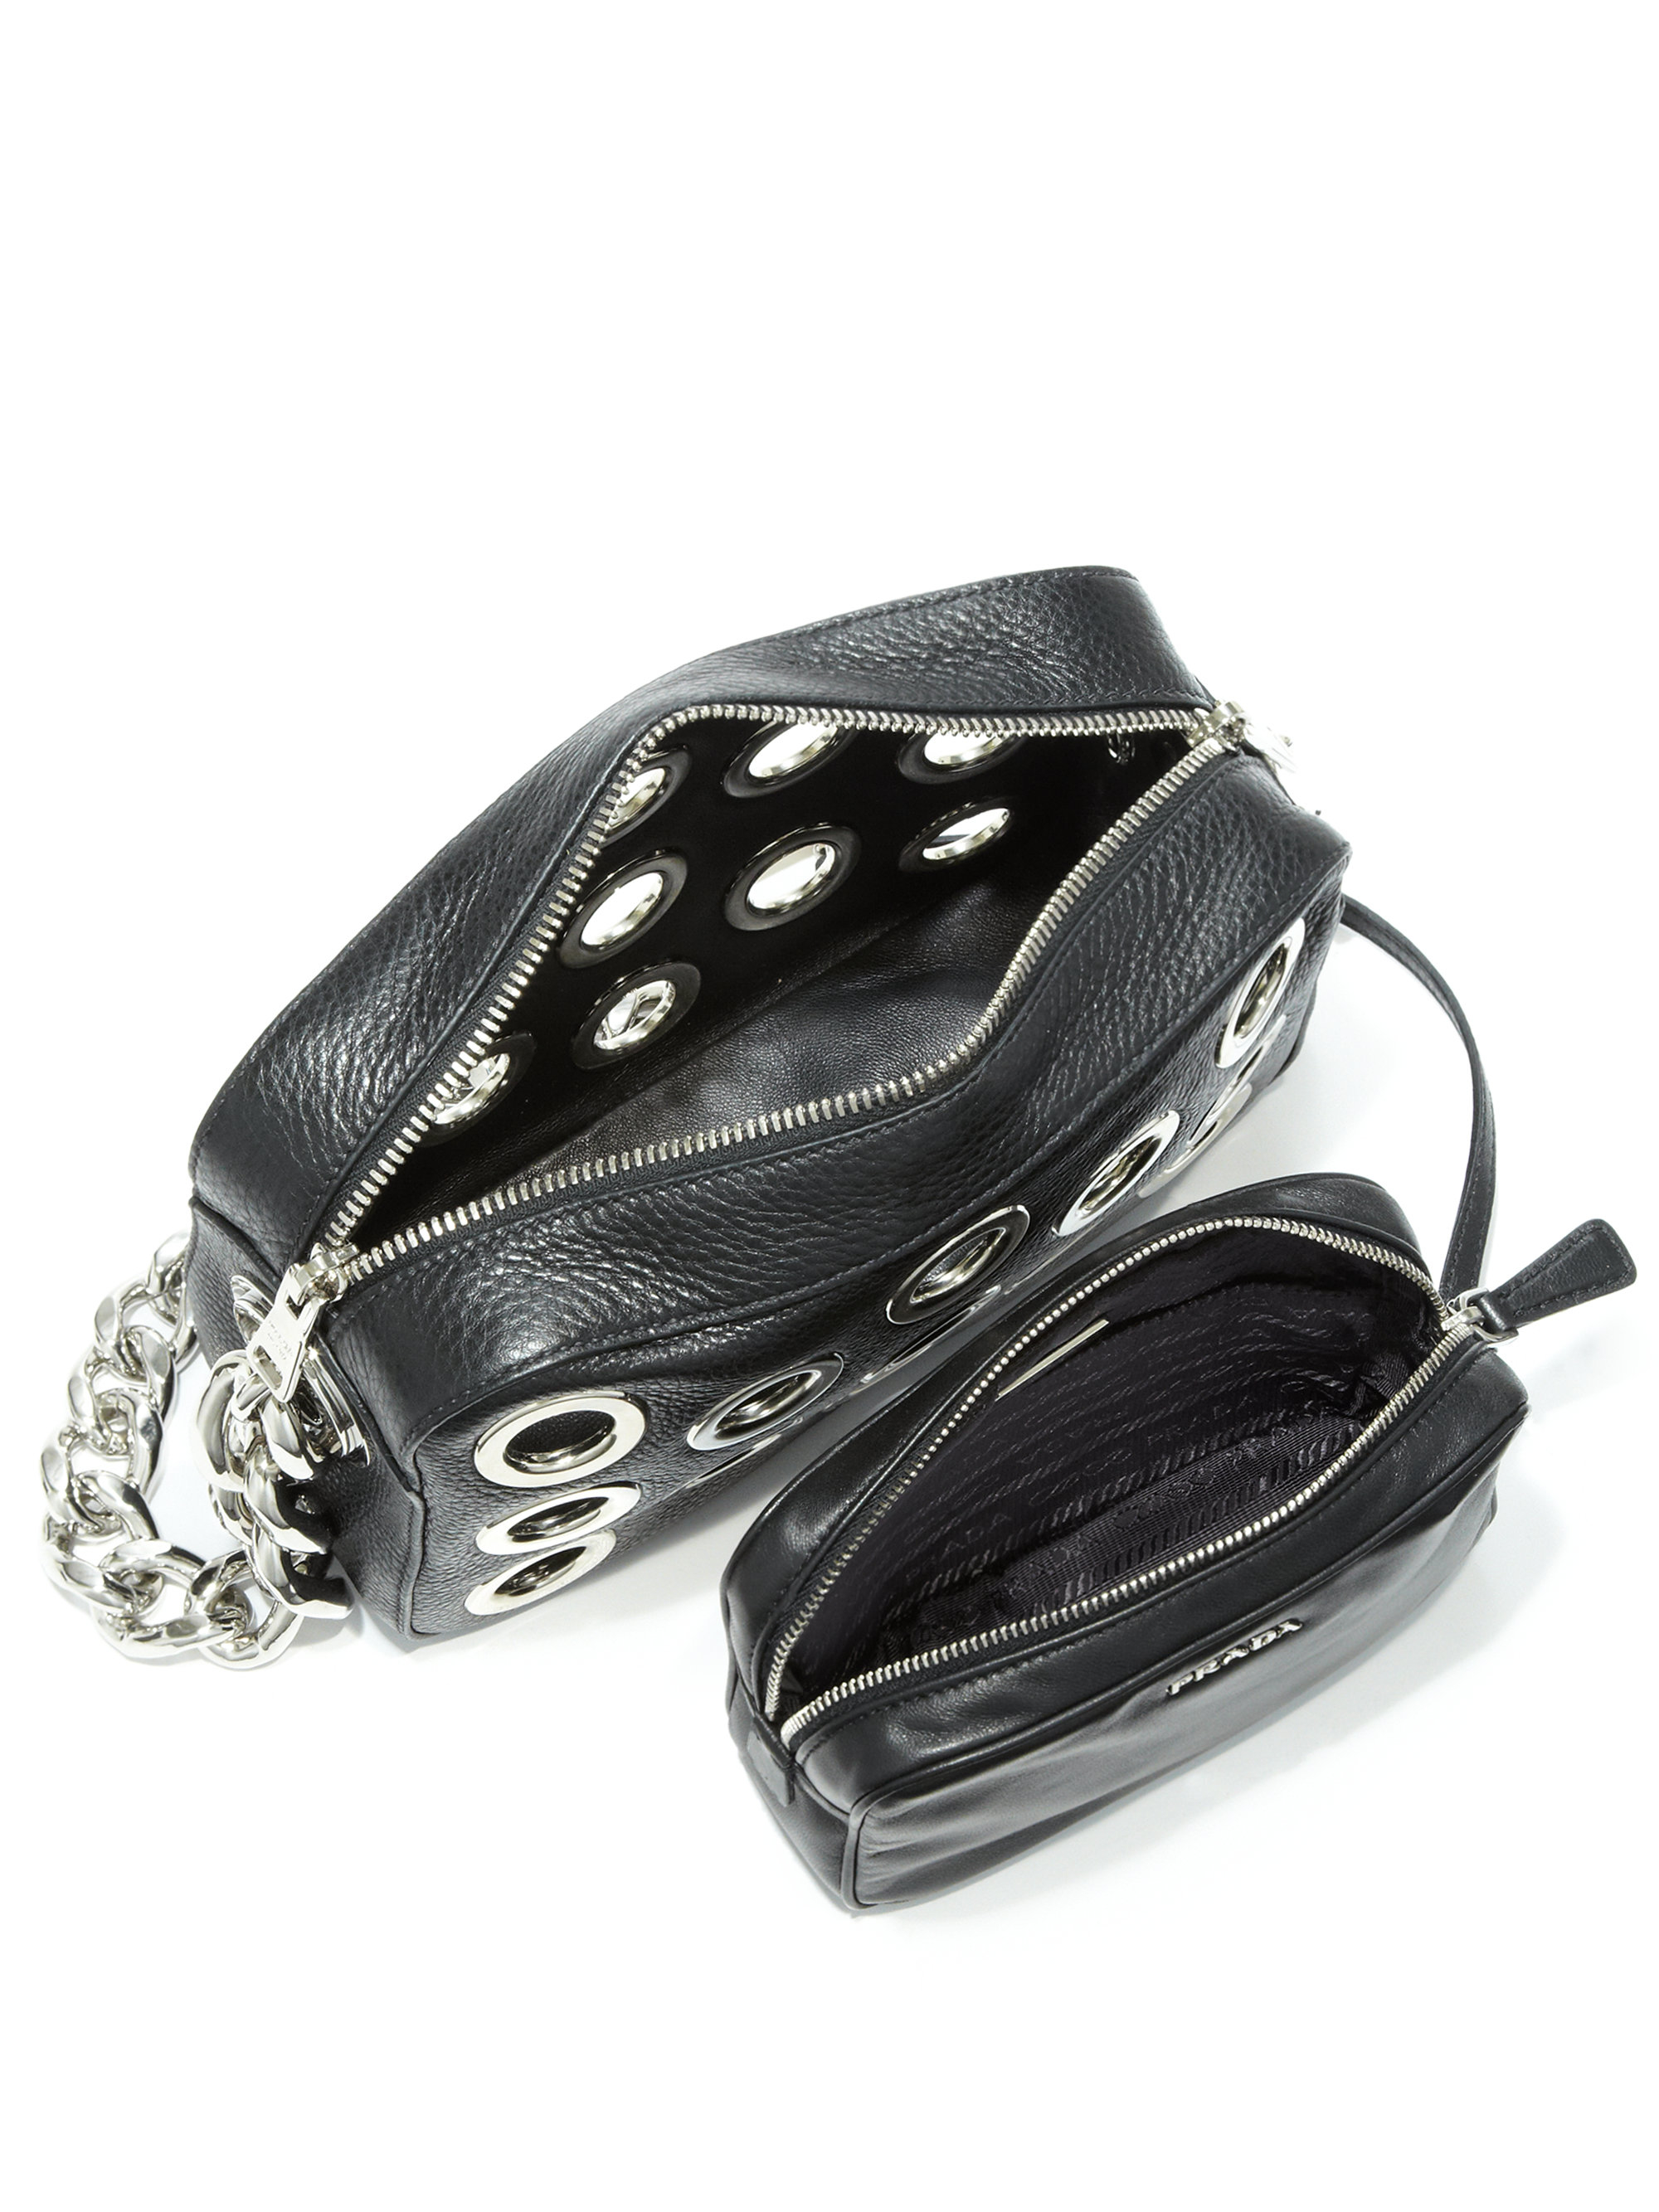 Prada Daino Chain Bowler Bag With Grommets in Black (nero) | Lyst  